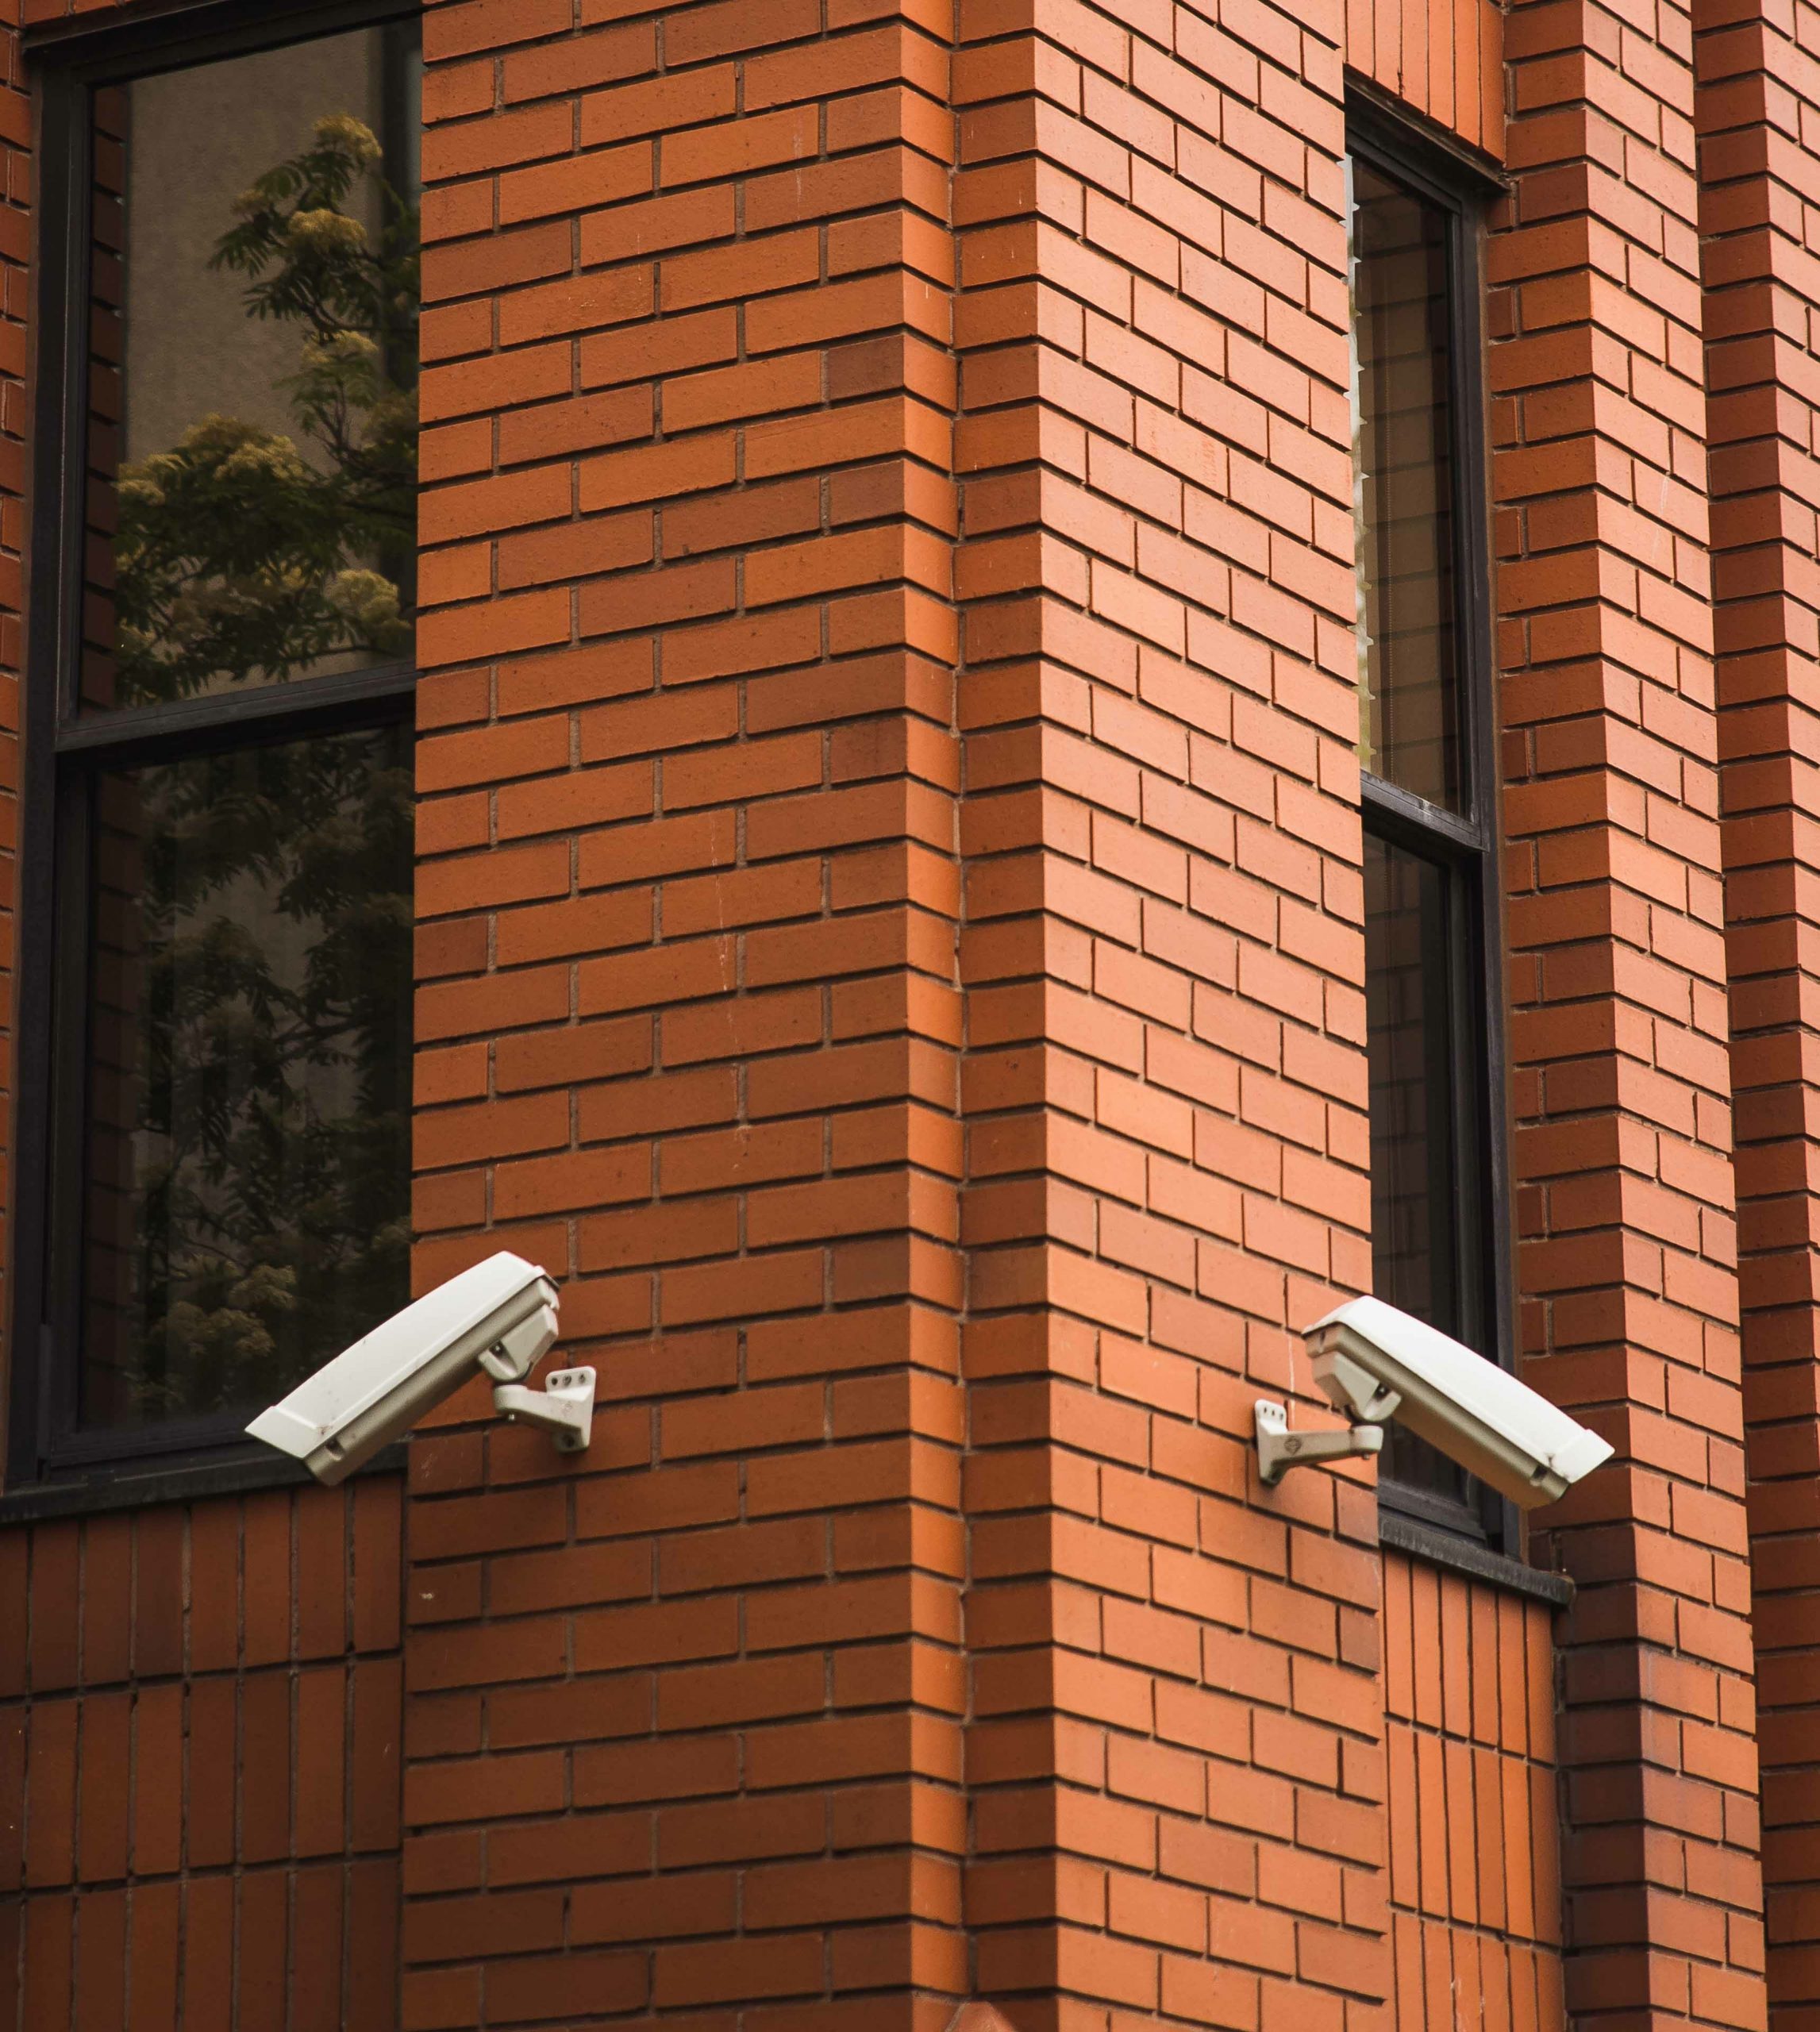 CCTV & Remote Monitoring